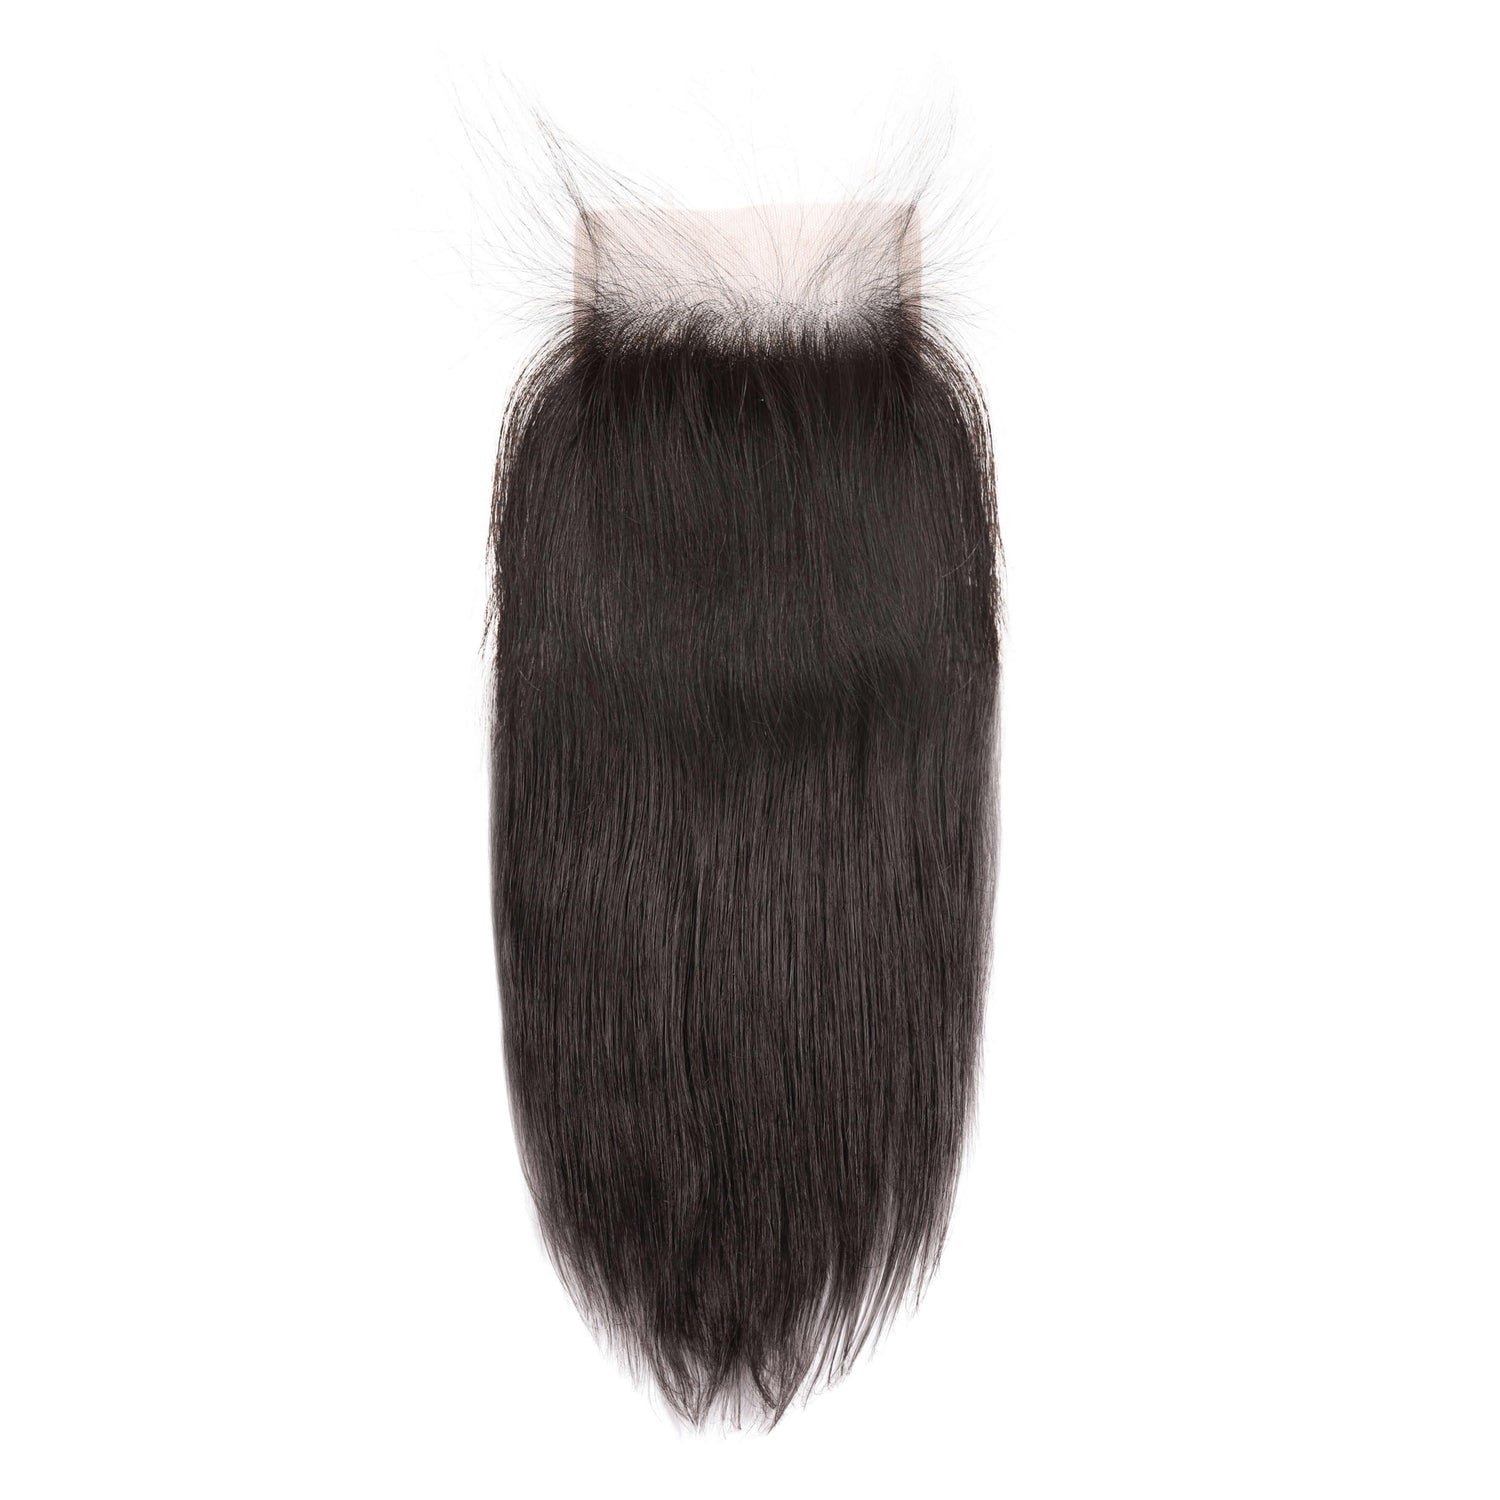 Transparent 5x5 Lace Closure Brazilian Straight 100% Virgin Hair Natural Black Color - SHINE HAIR WIG